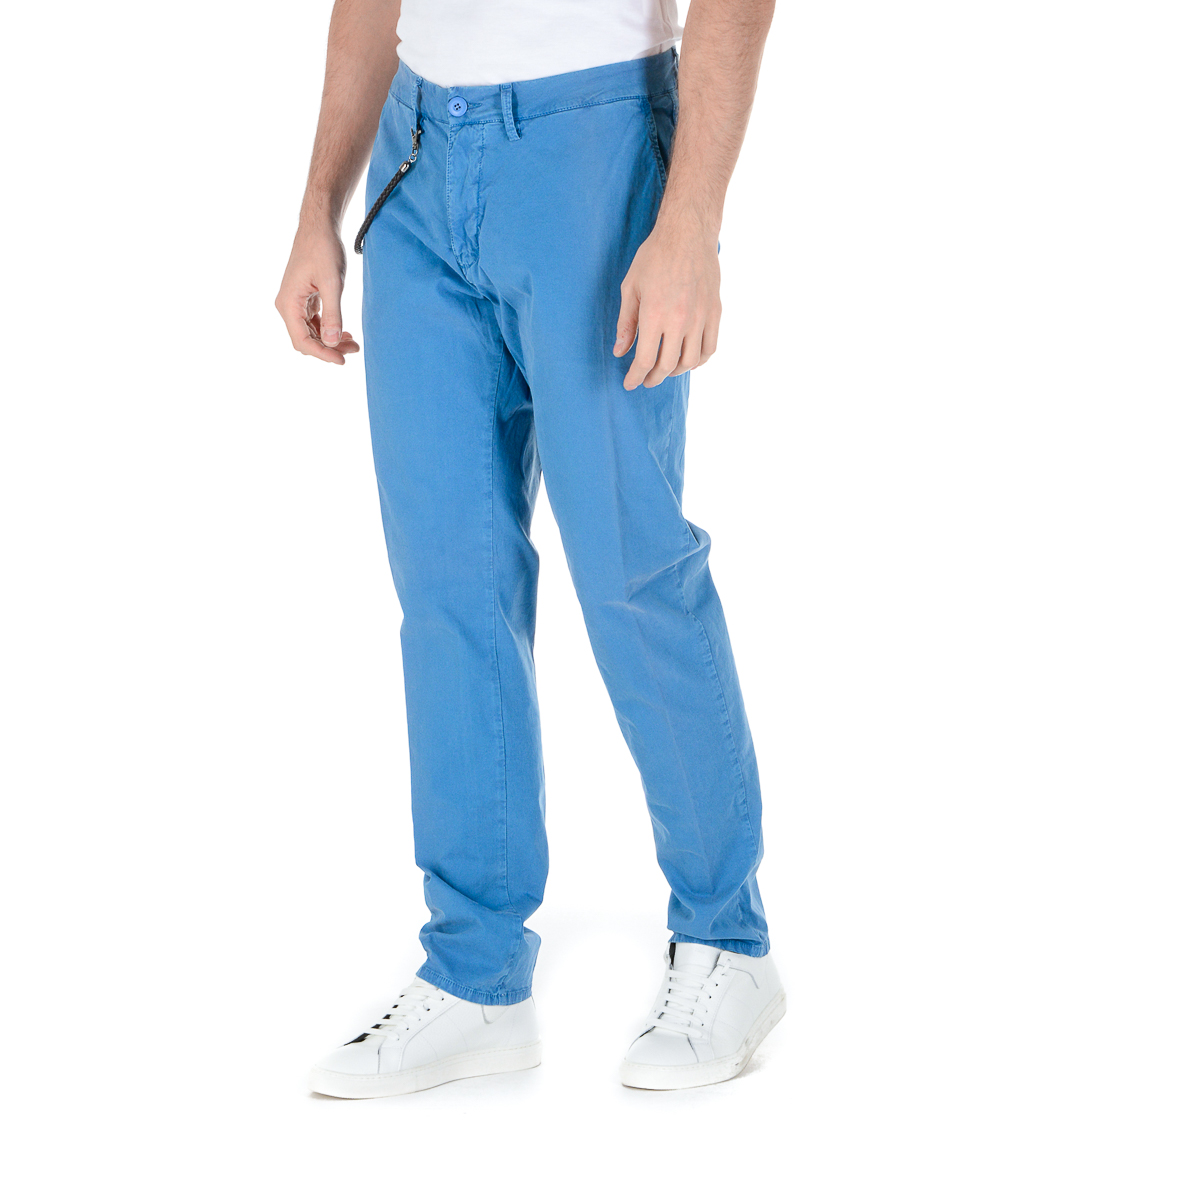 Modfitters Mens Pants Light Blue COMFORT MASSAUA